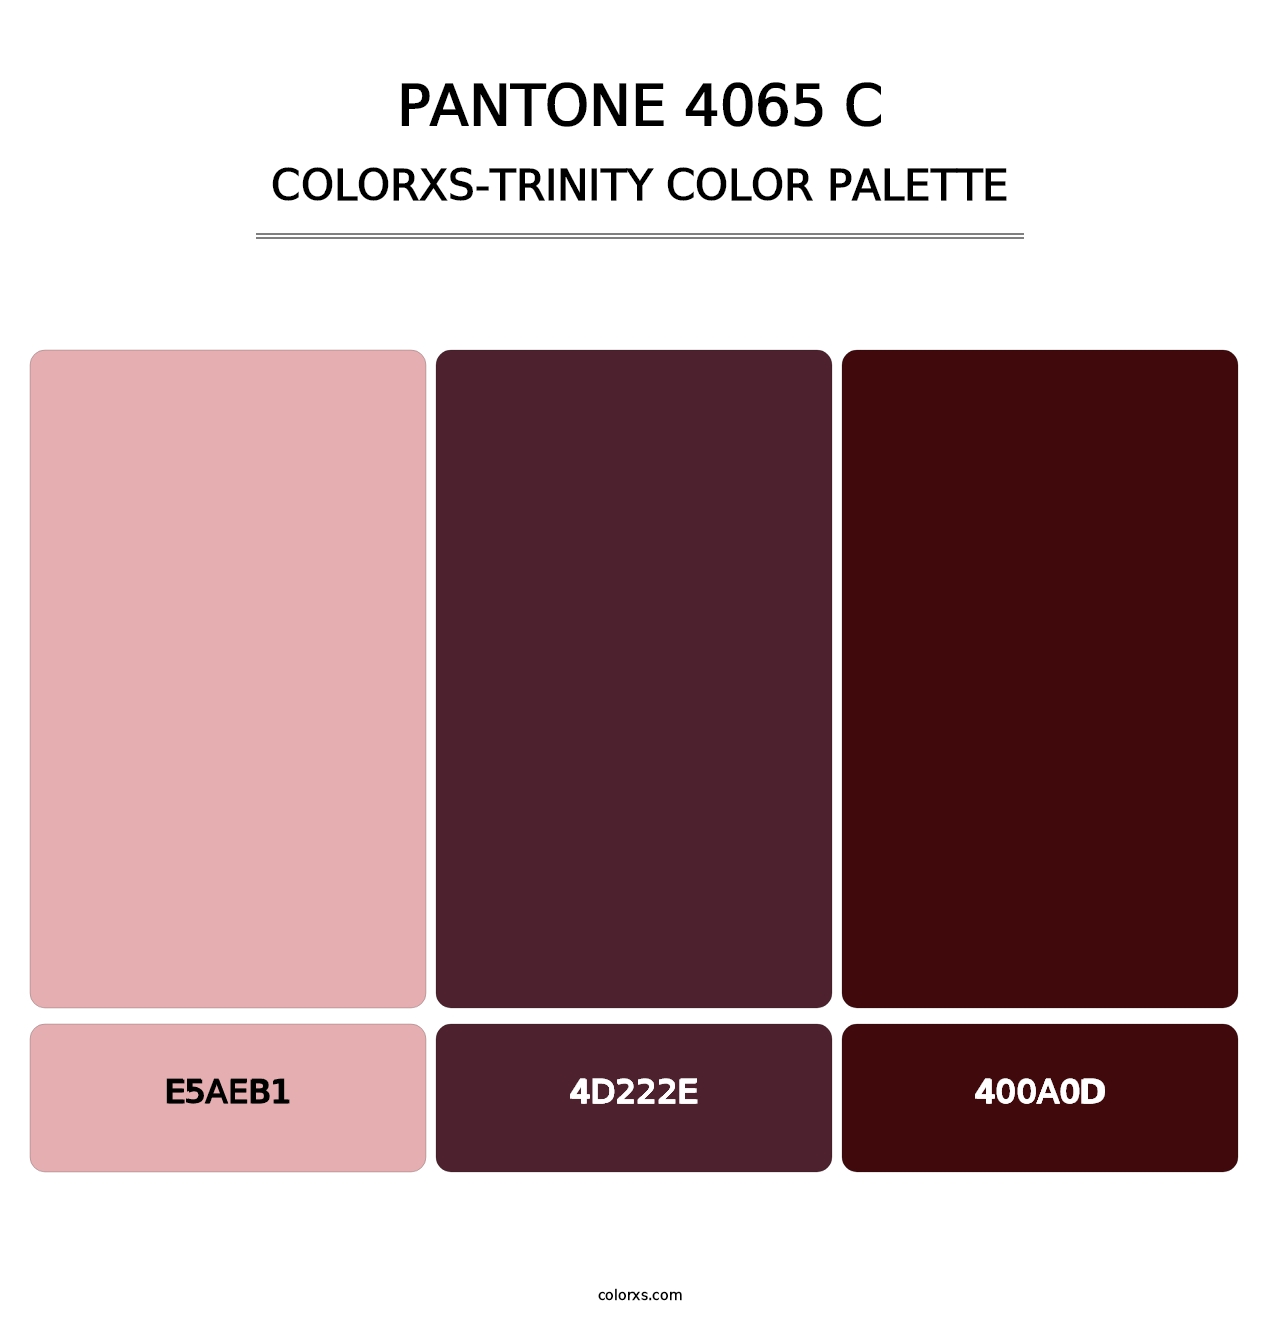 PANTONE 4065 C - Colorxs Trinity Palette